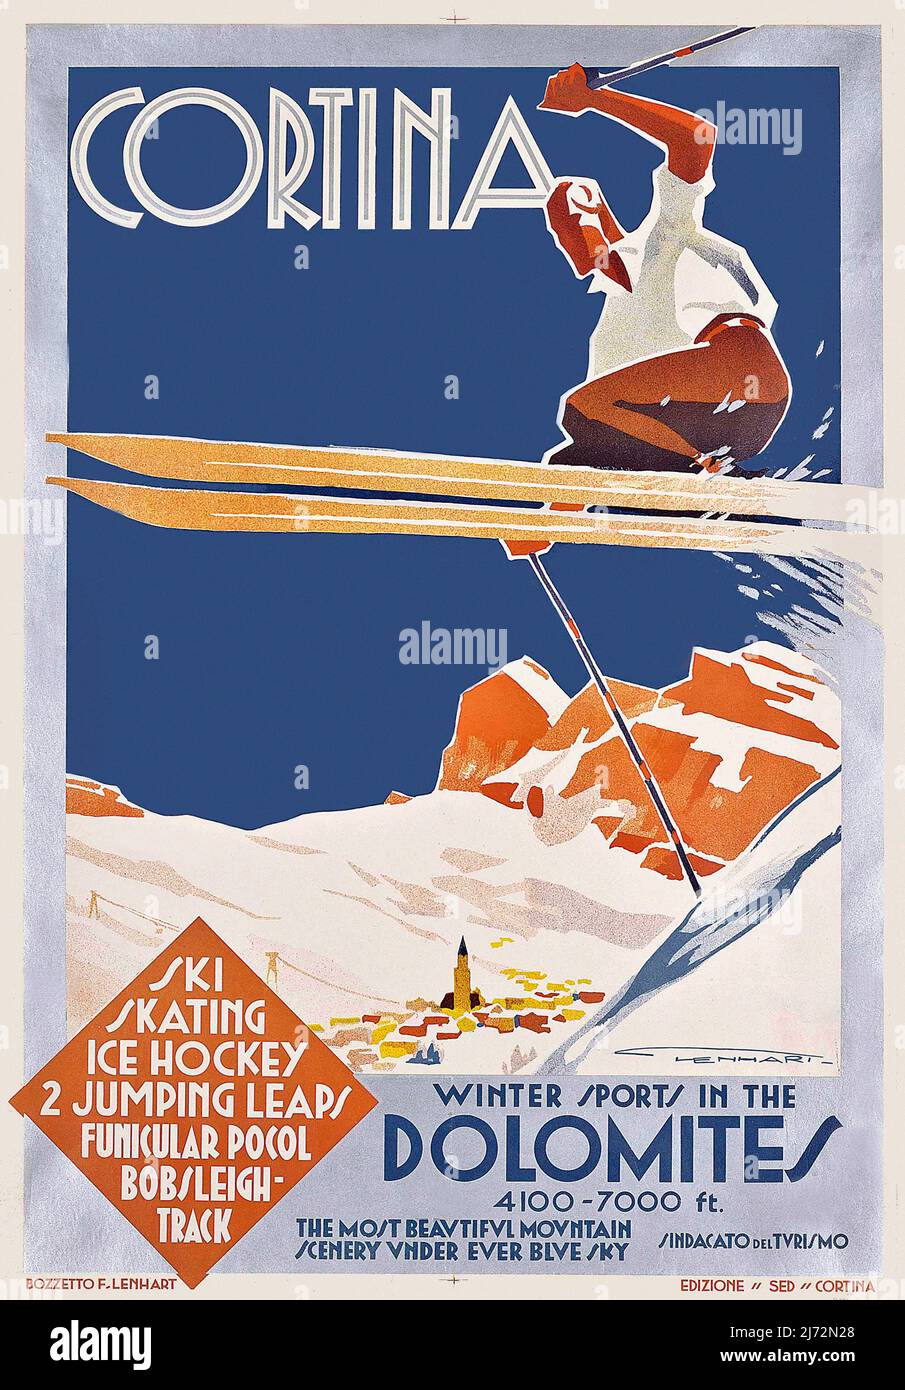 Vintage 1930s Travel Poster - Cortina Dolomites - Winter Sport, c 1930. Franz Lenhart (1898-1992). Stock Photo